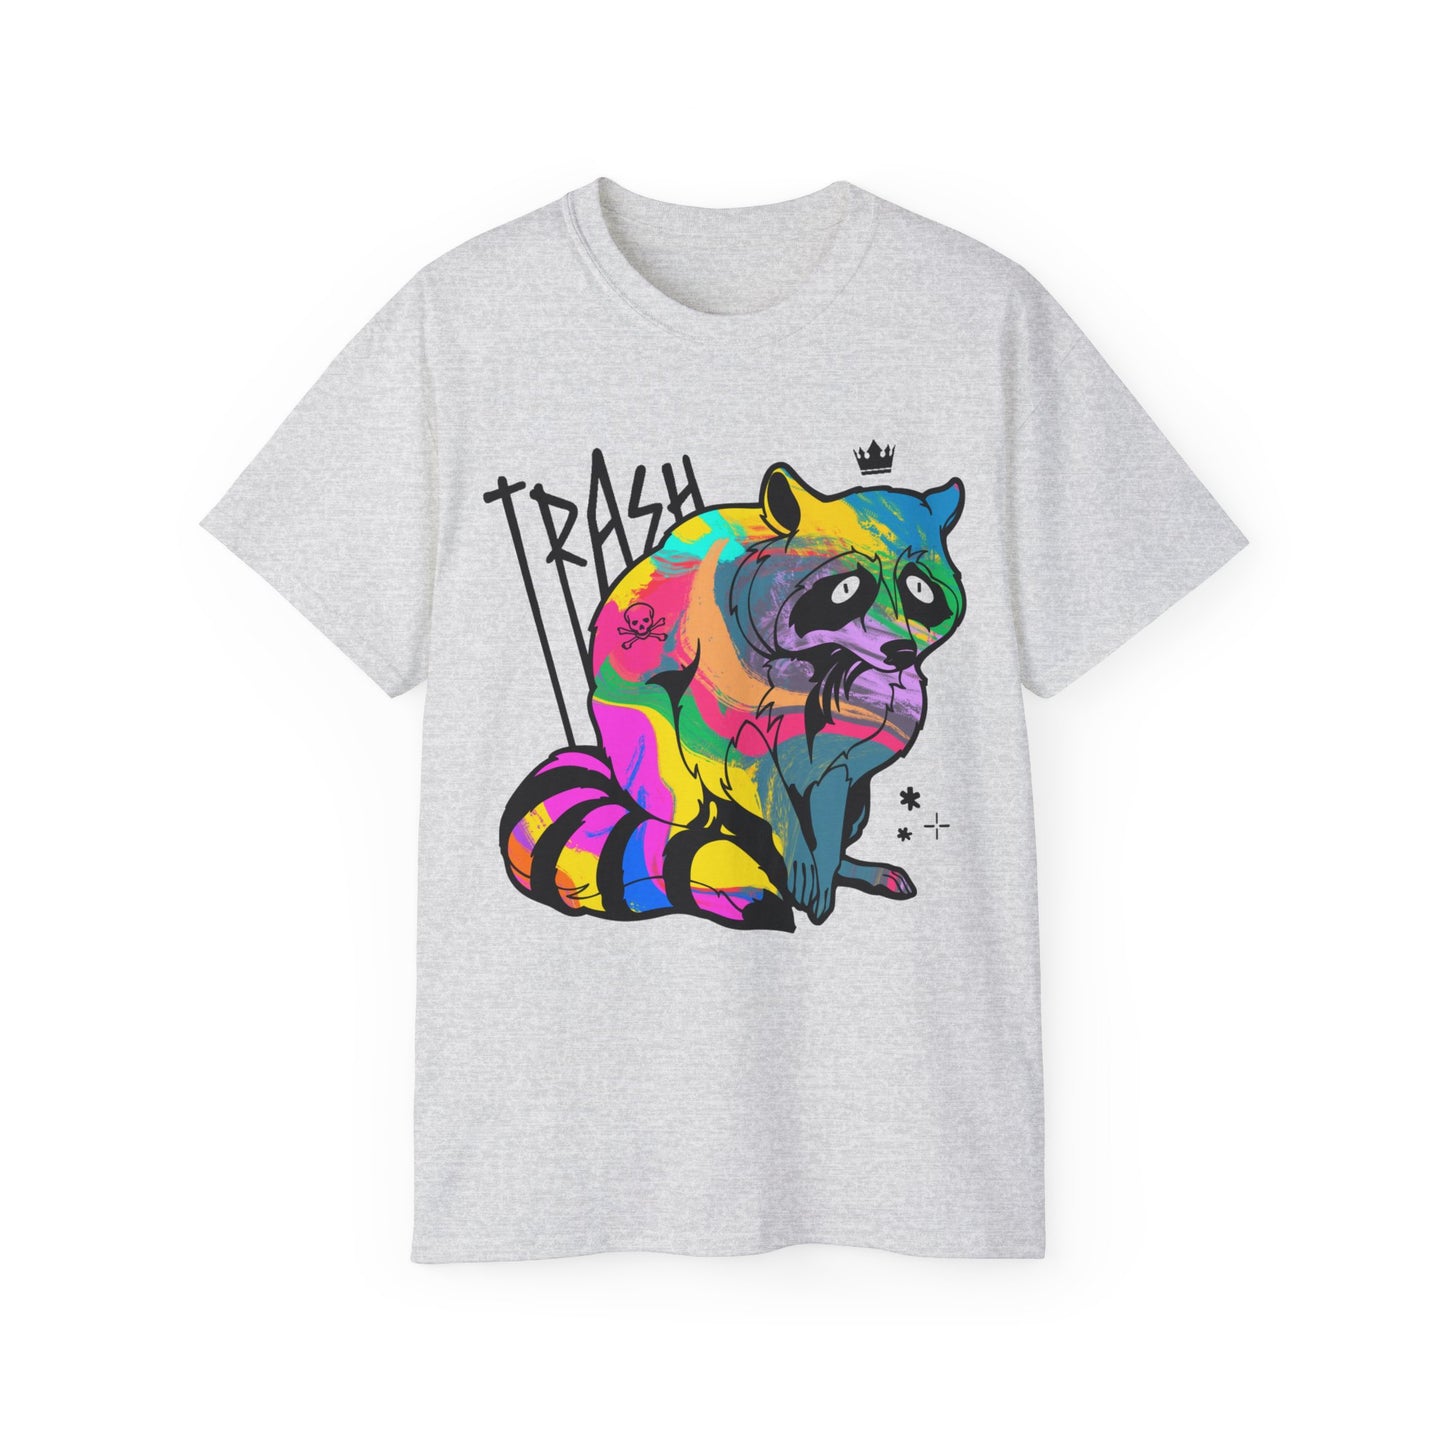 Trash Raccoon T-shirt